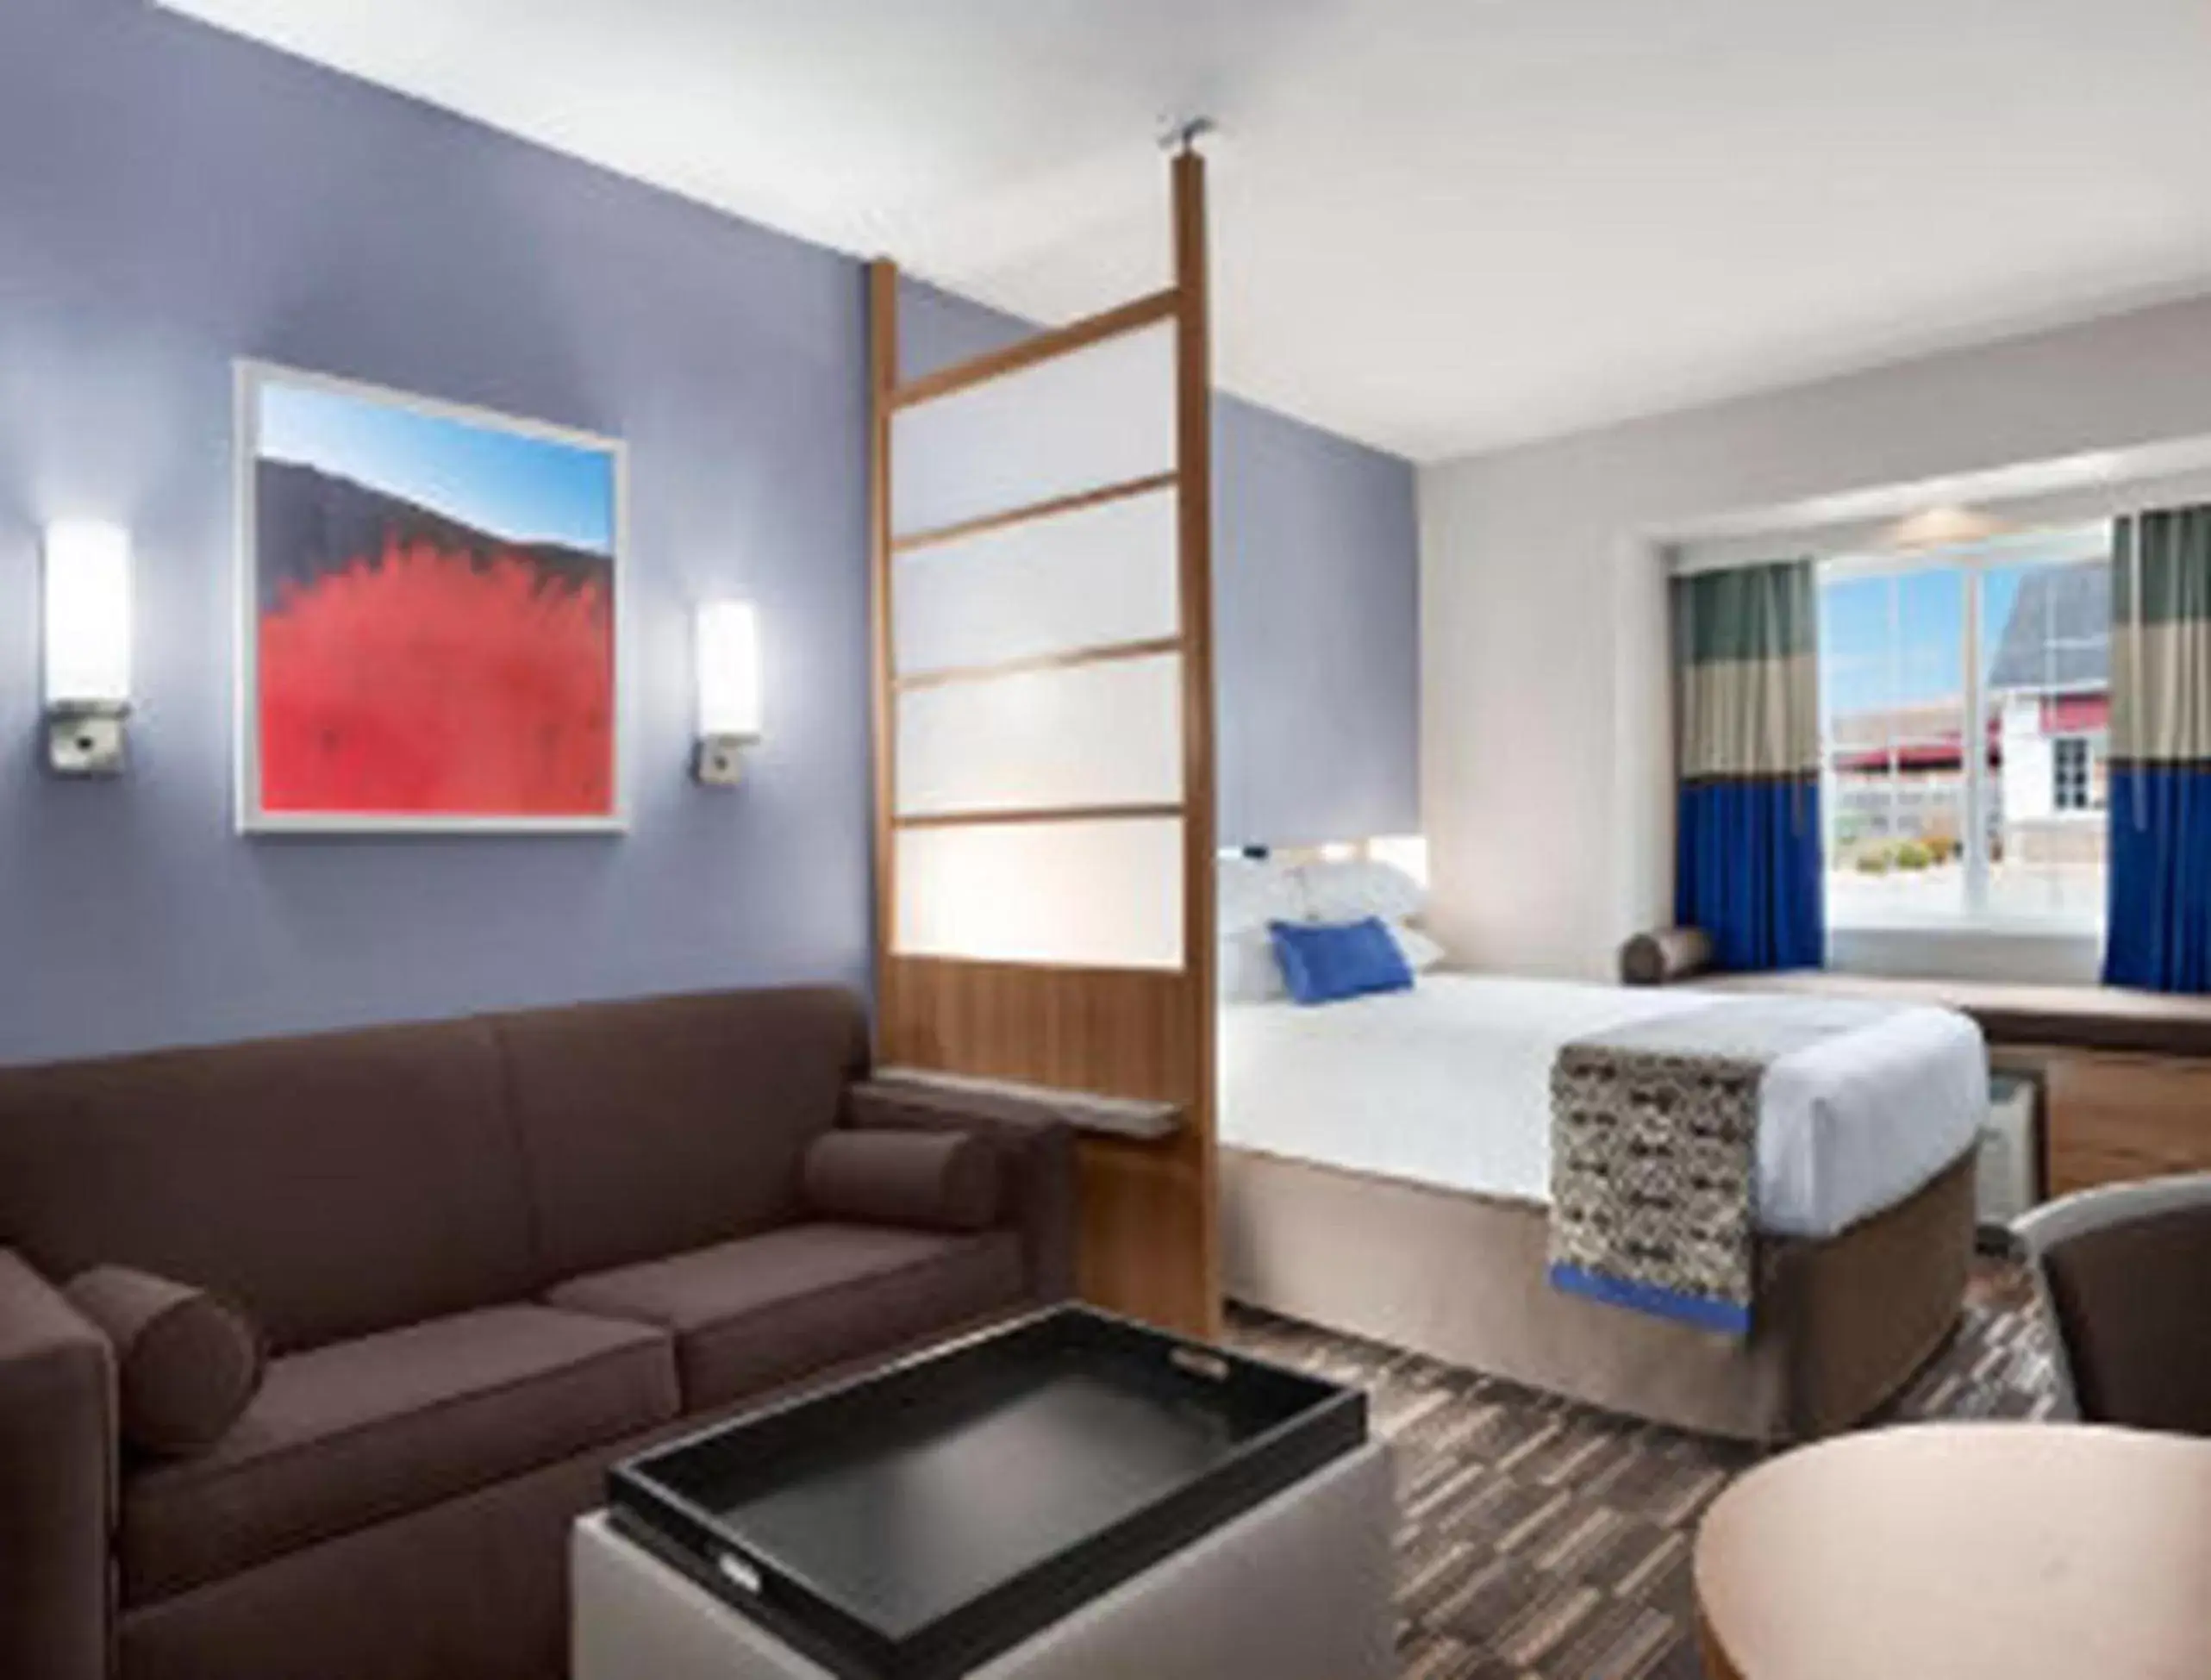 Bed in Microtel Inn & Suites by Wyndham Altoona